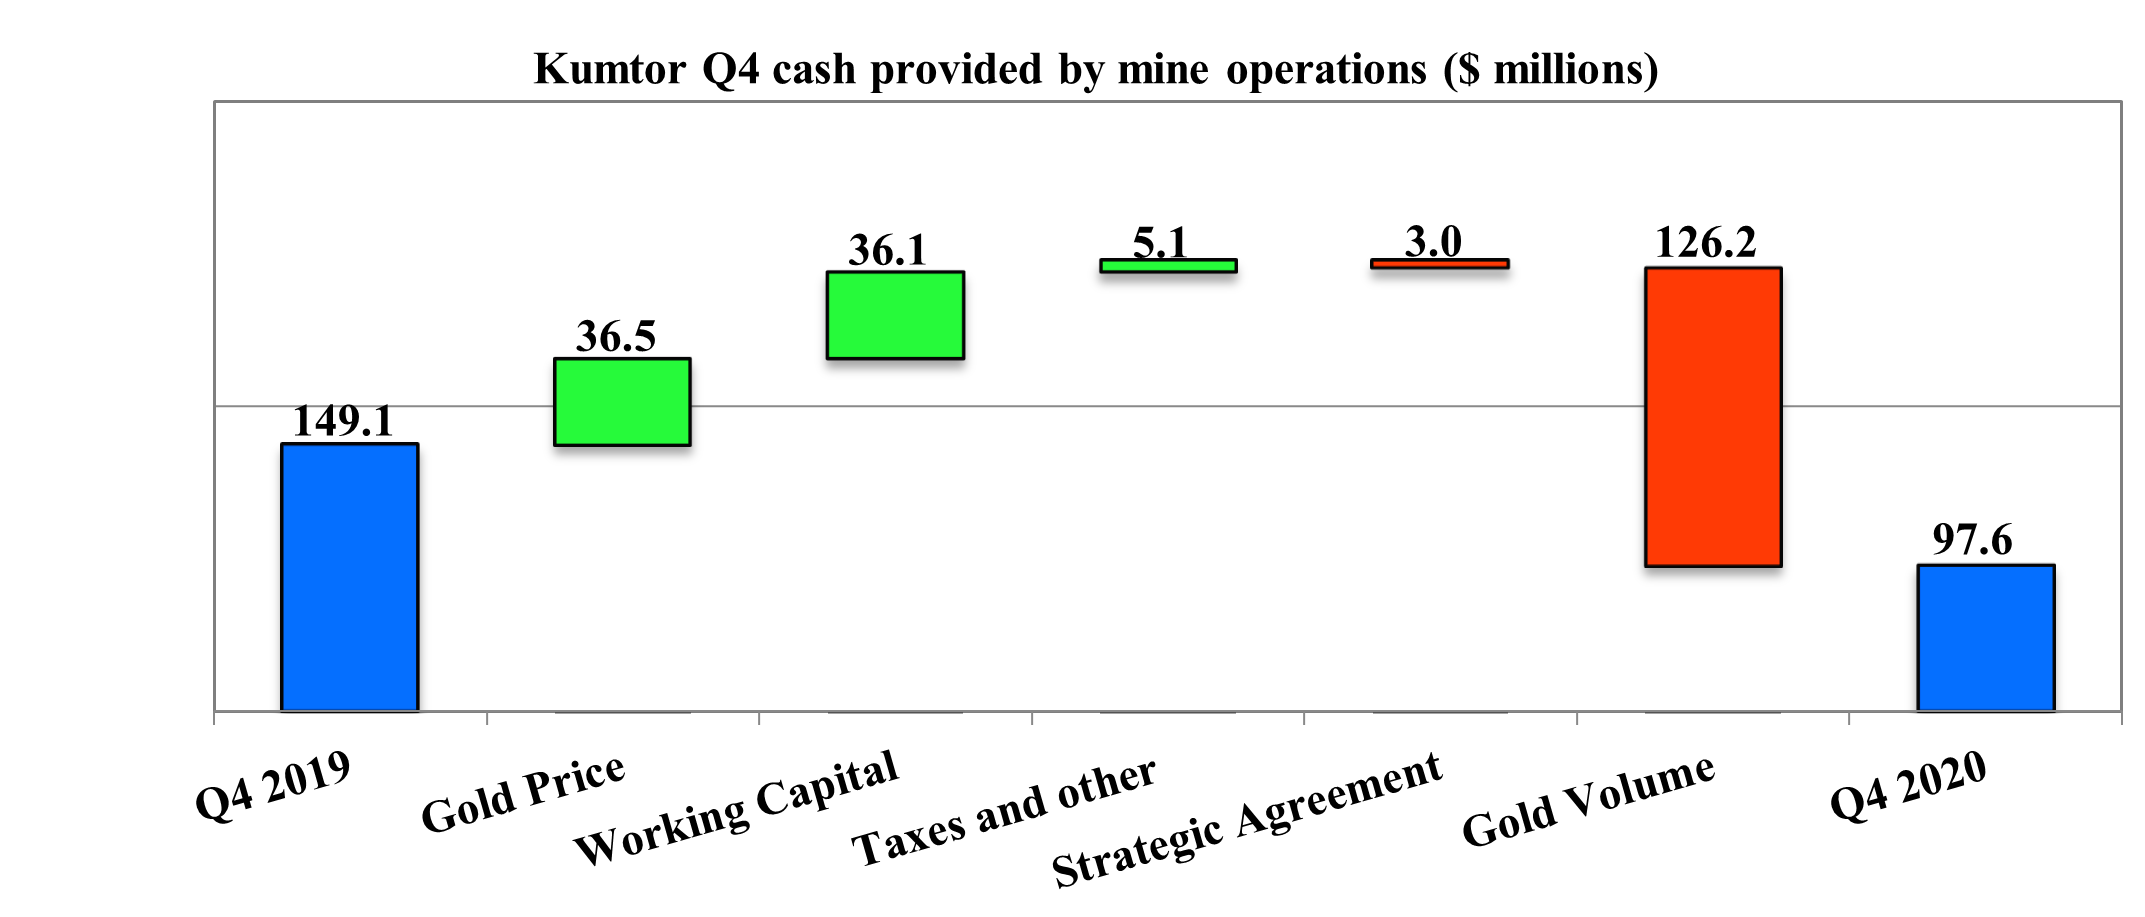 Kumtor Q4 cash provided by mine operations ($ millions)